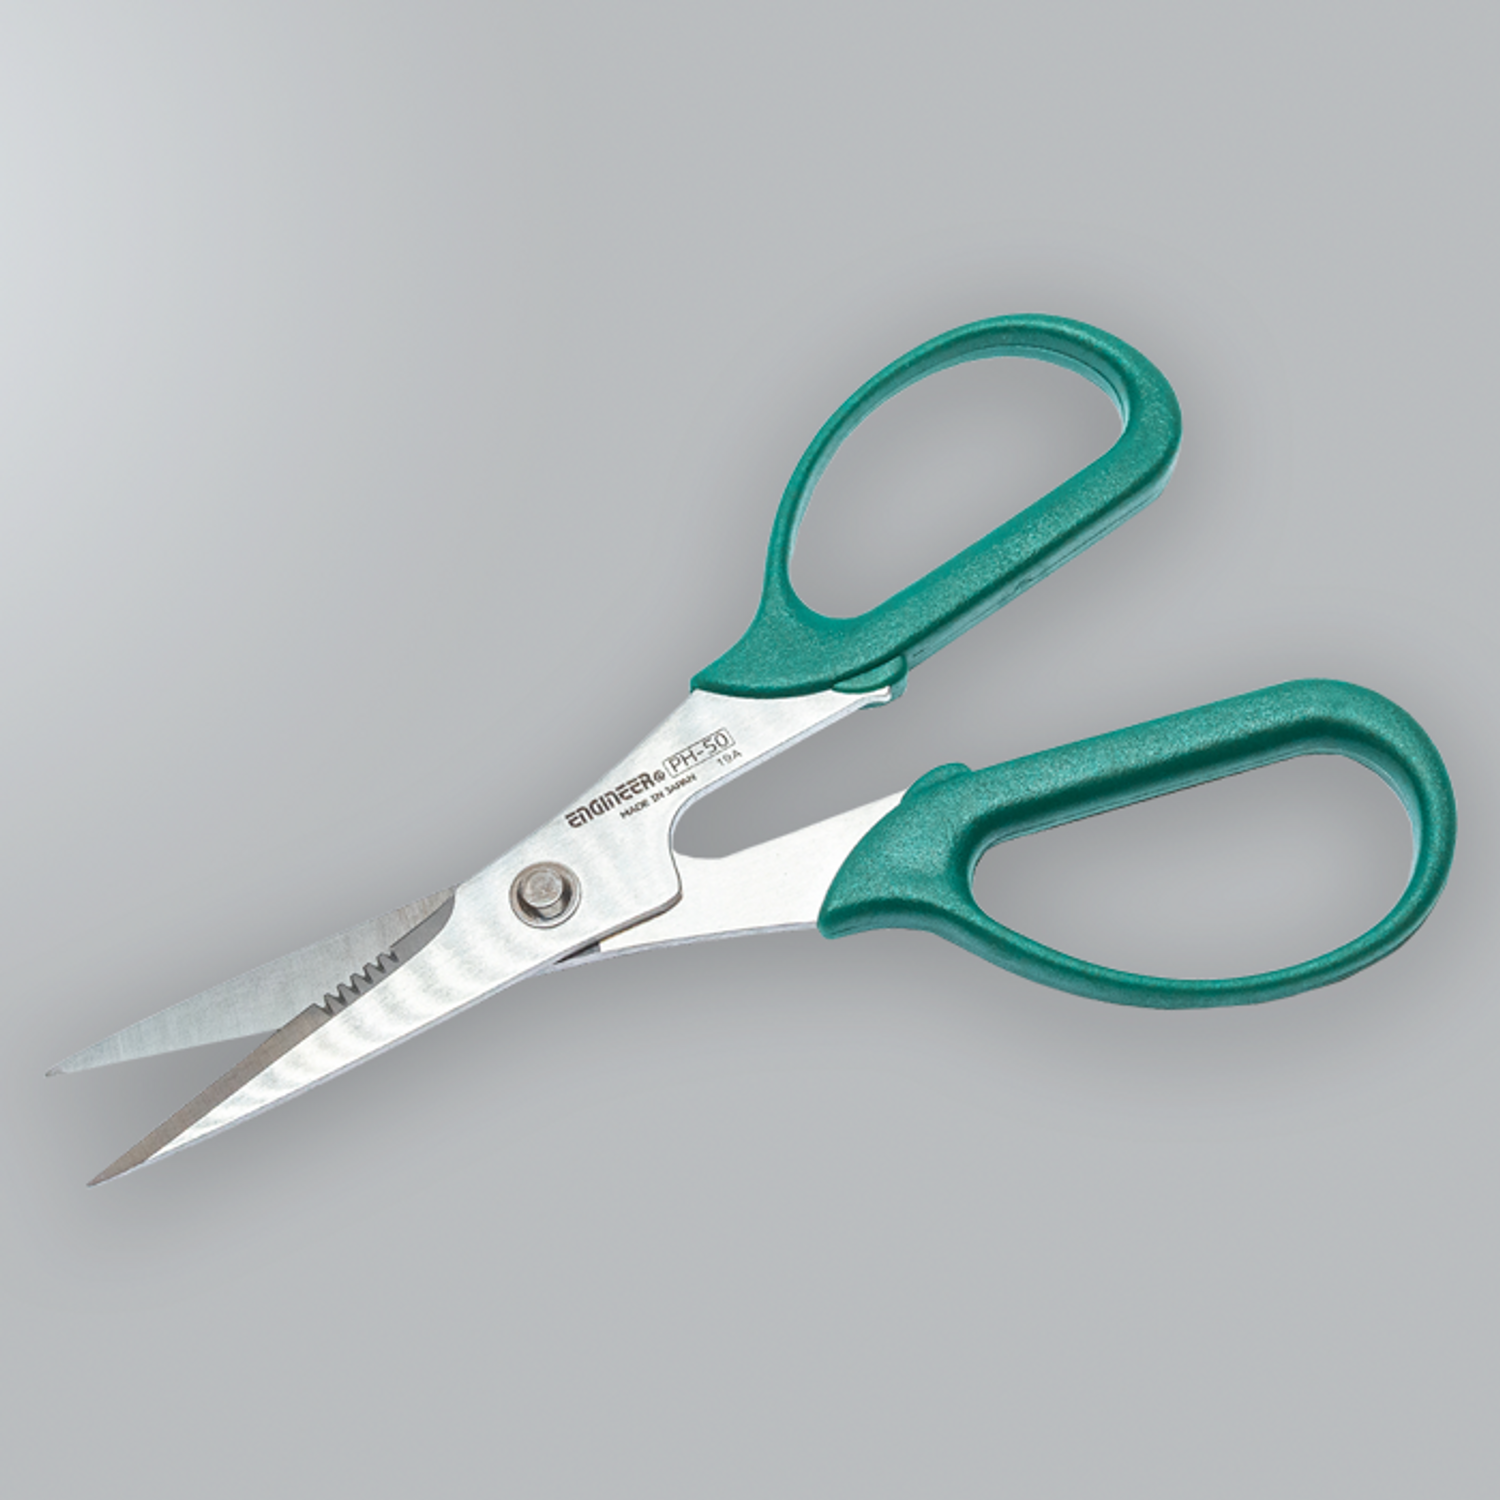 PH-57 heavy duty scissors (multi-function, kevlar capable)